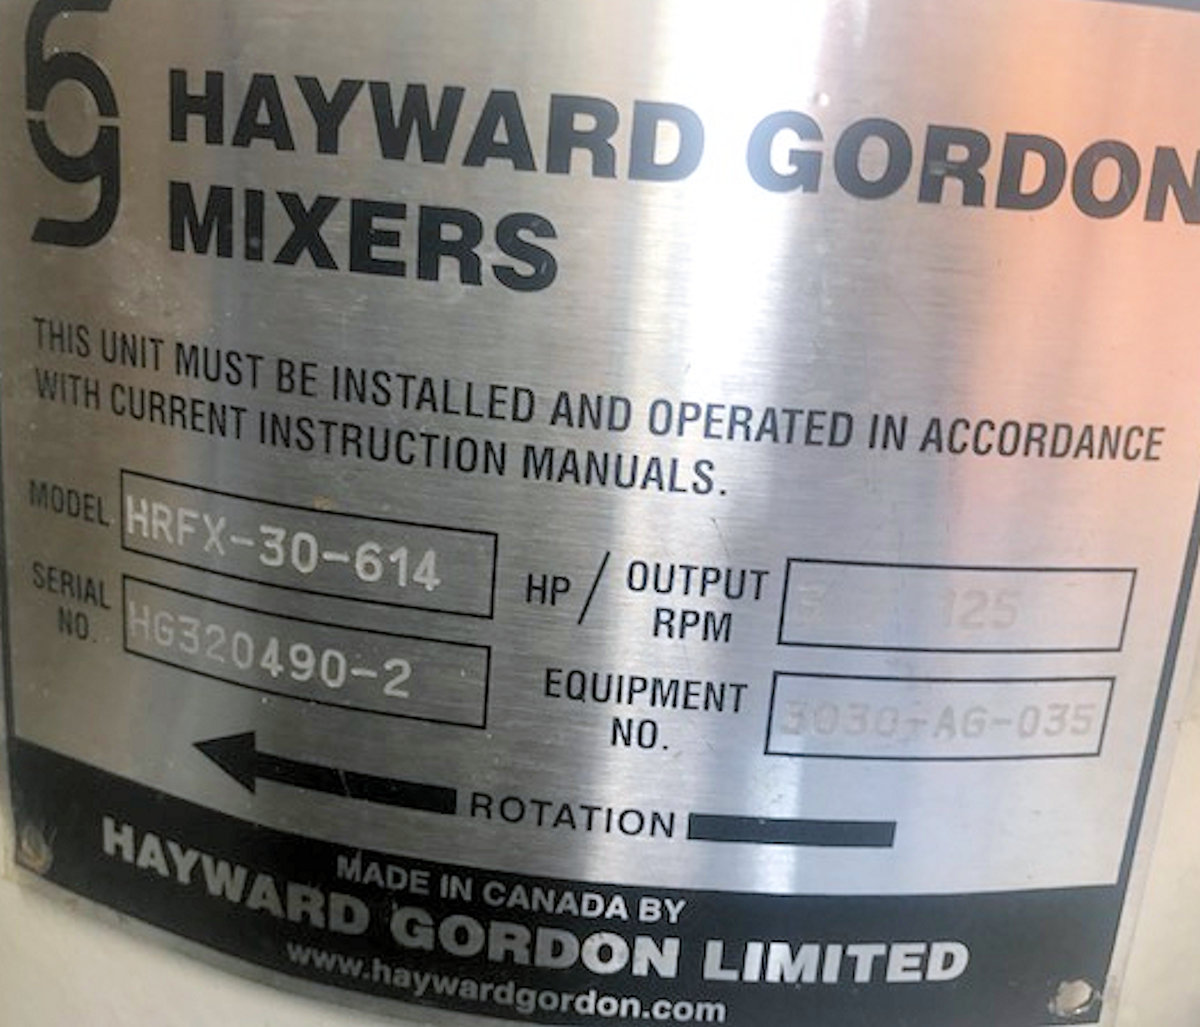 3 Units - Unused Hayward Gordon Model Hrfx-30-614agitators With 3 Hp Motor)